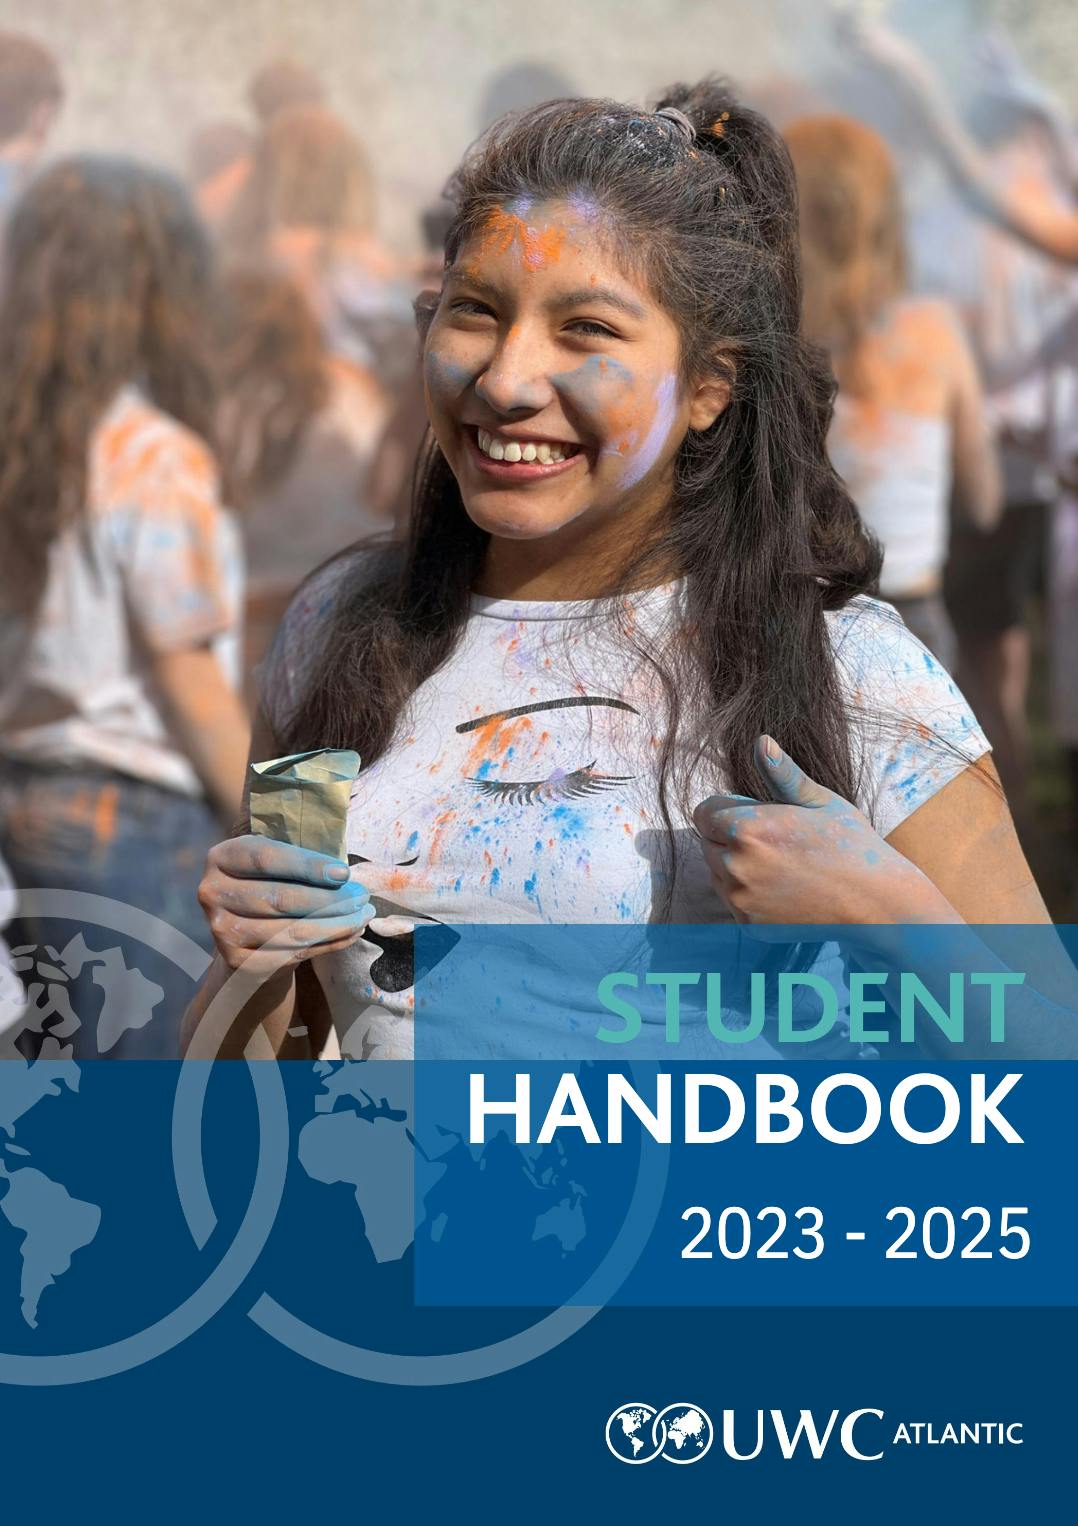 uwc atlantic student handbook 2023-2025